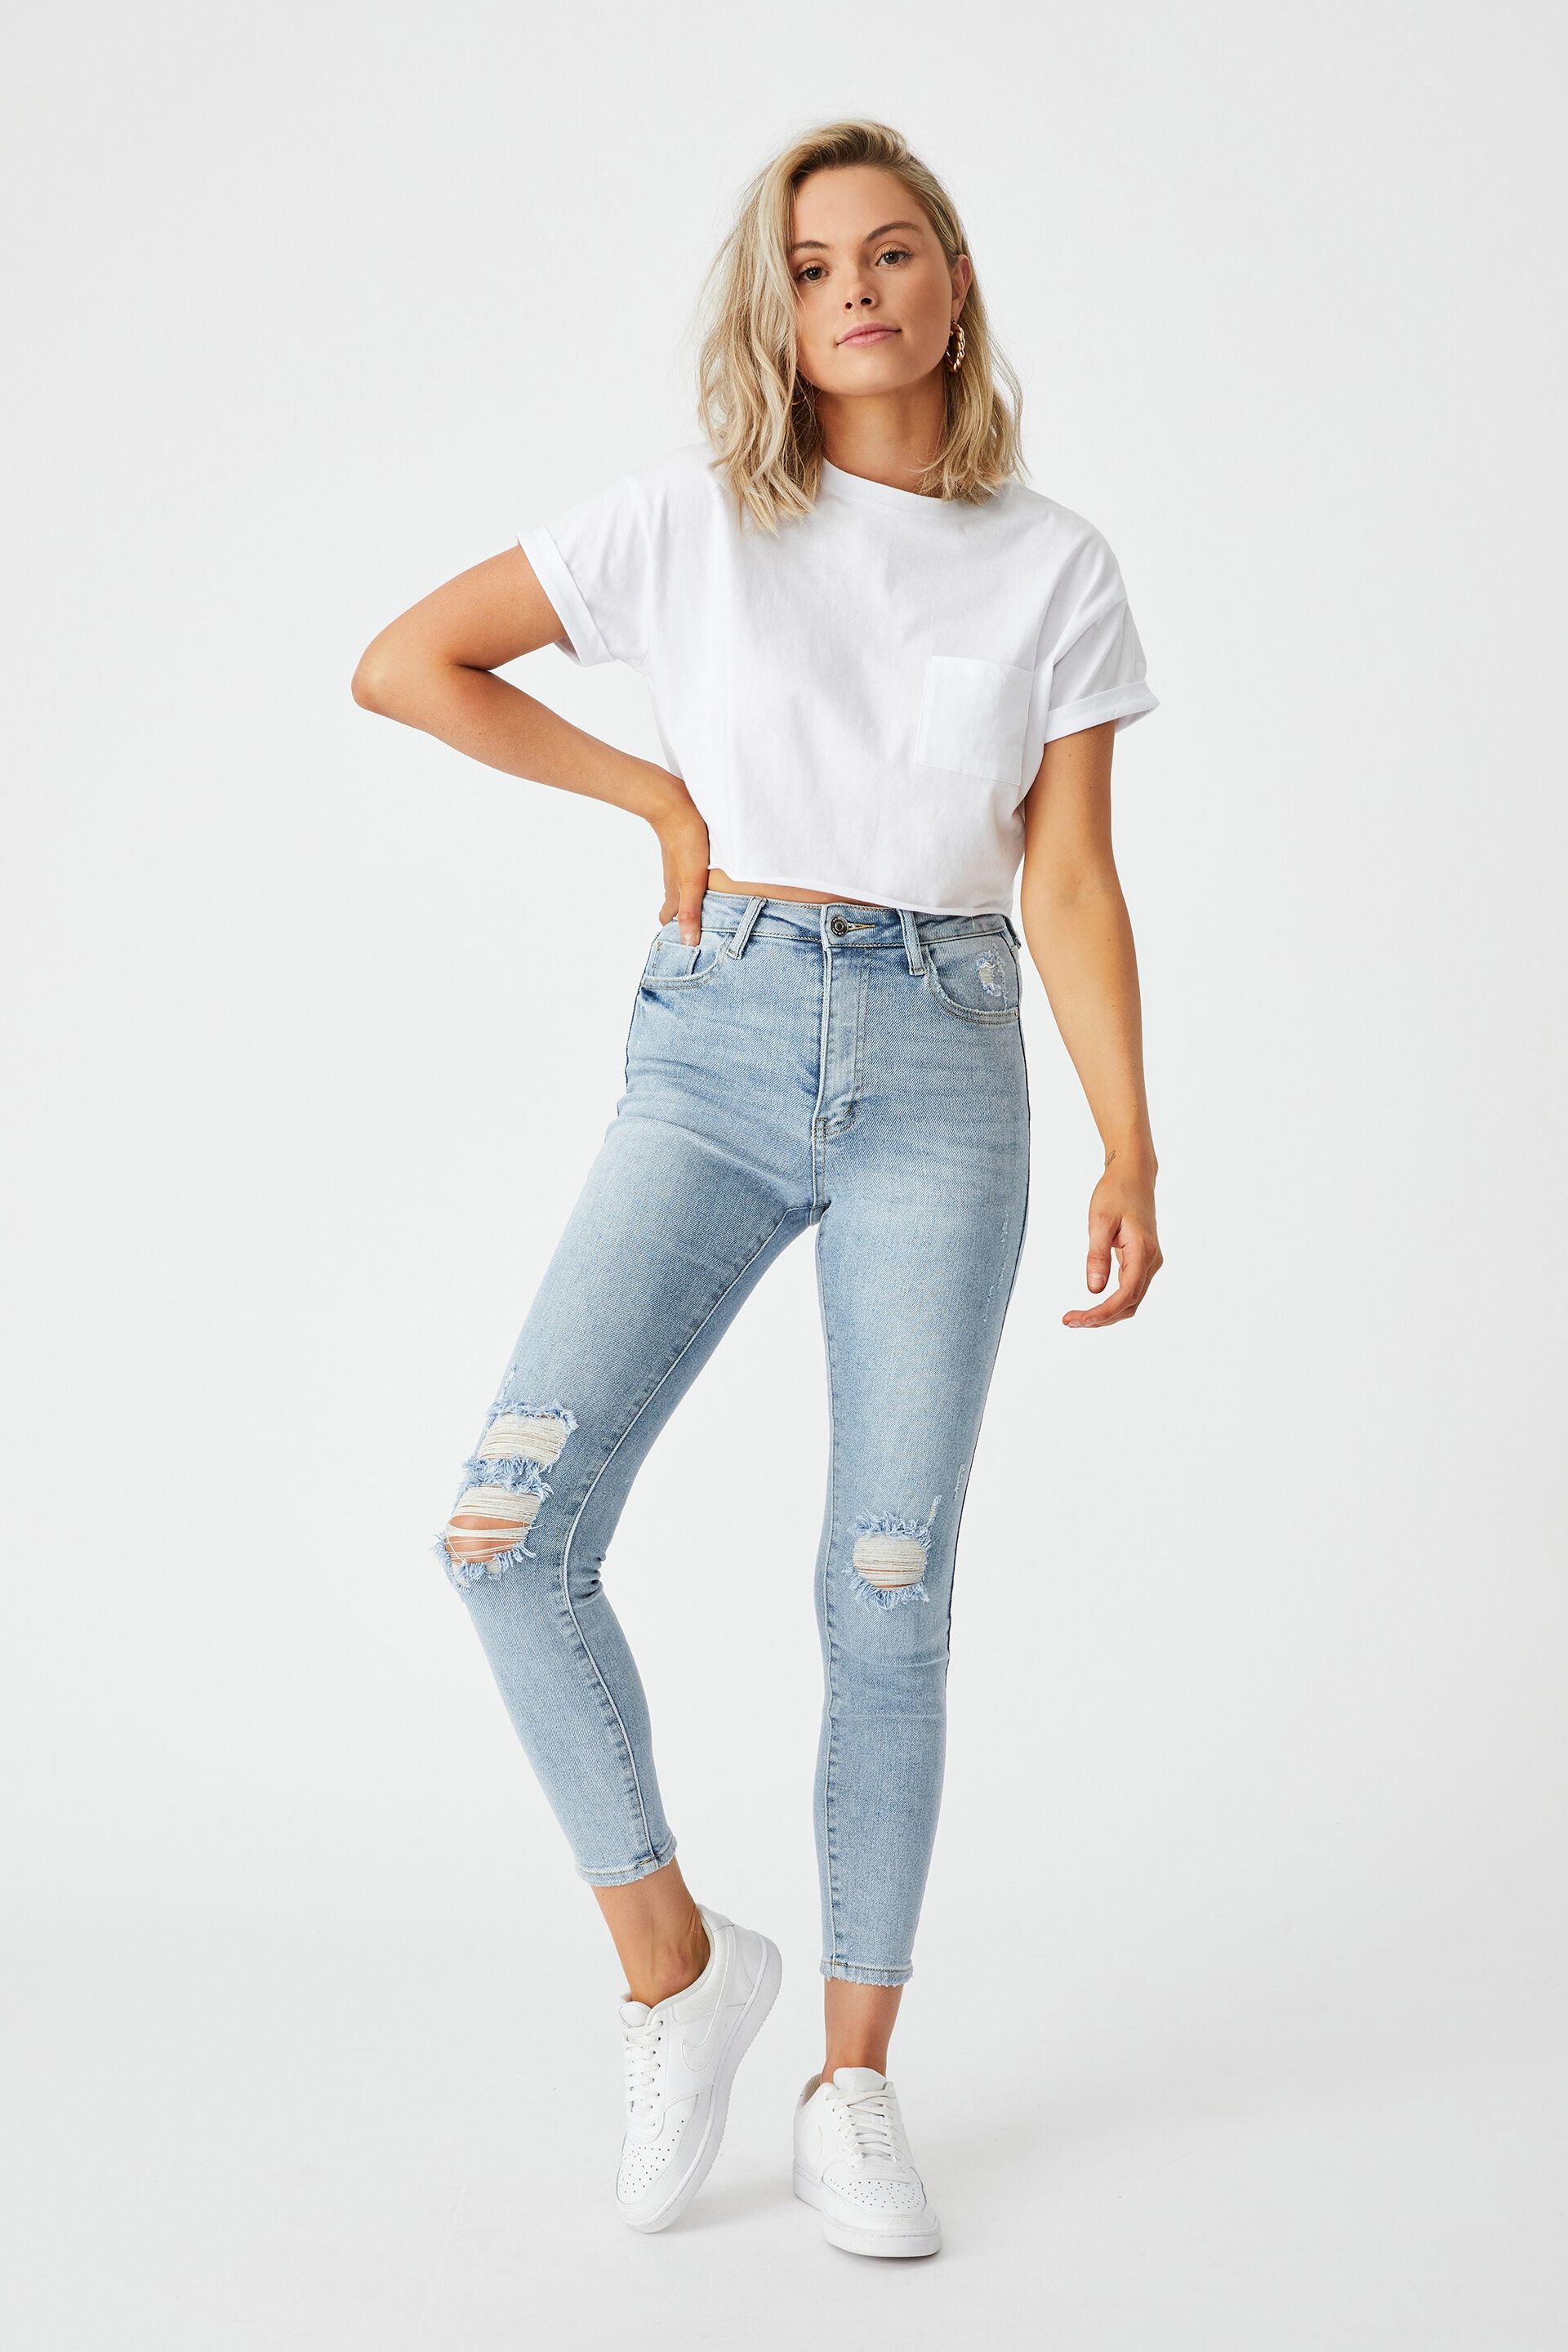 cotton on ladies jeans